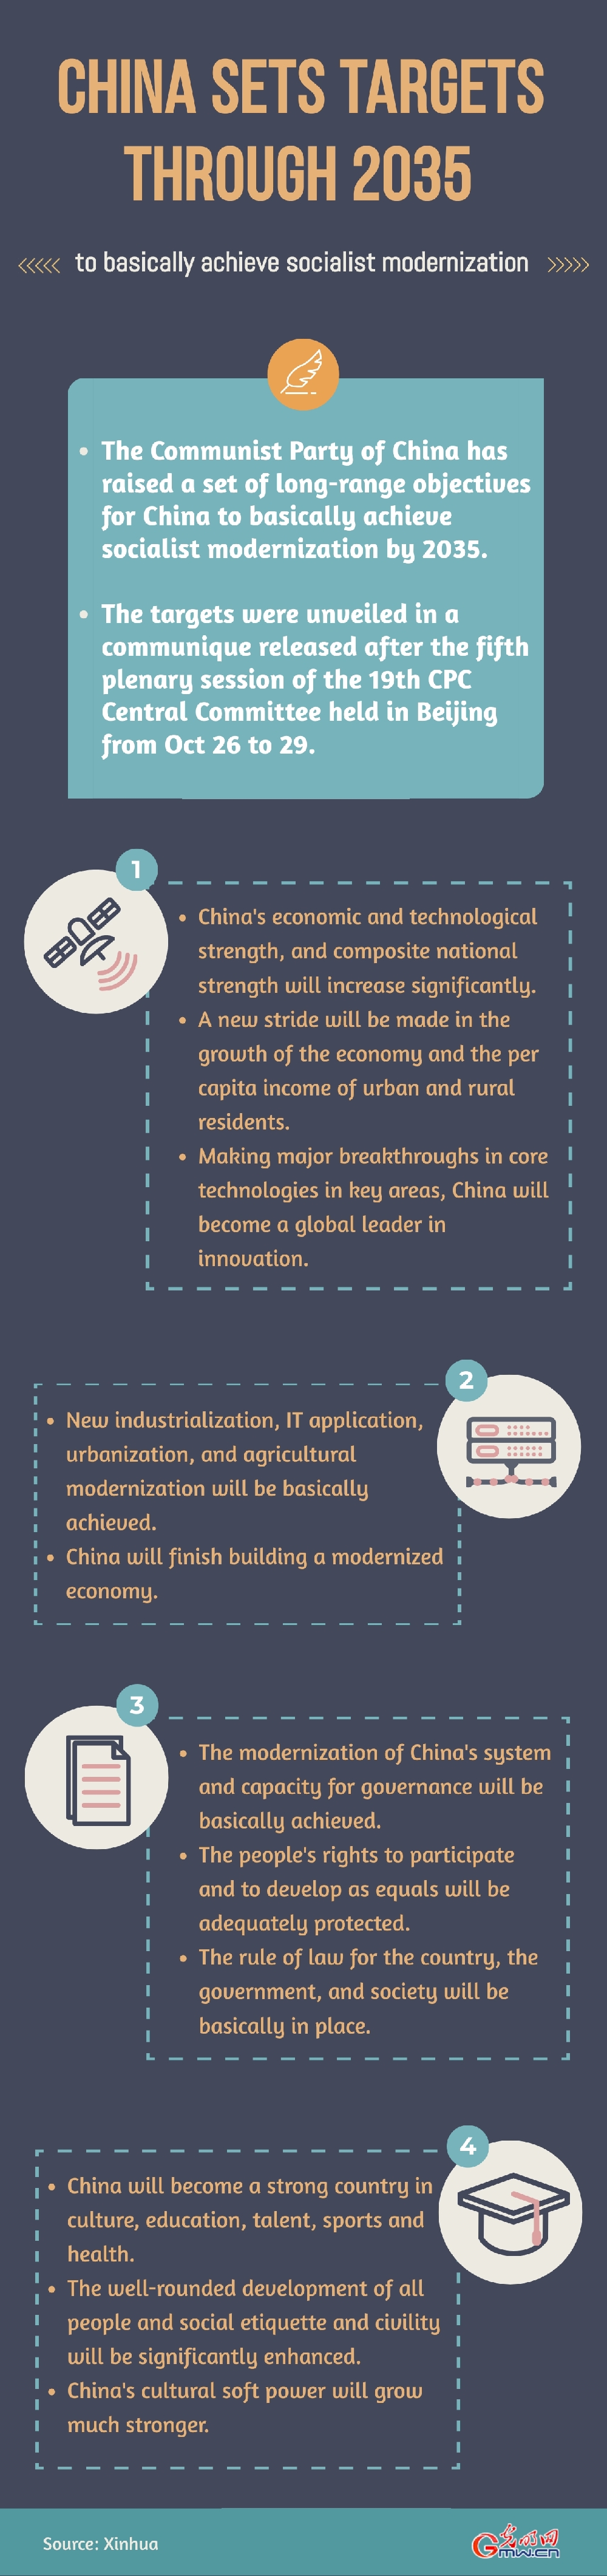 infographic-china-sets-targets-through-2035-i-gmw-cn